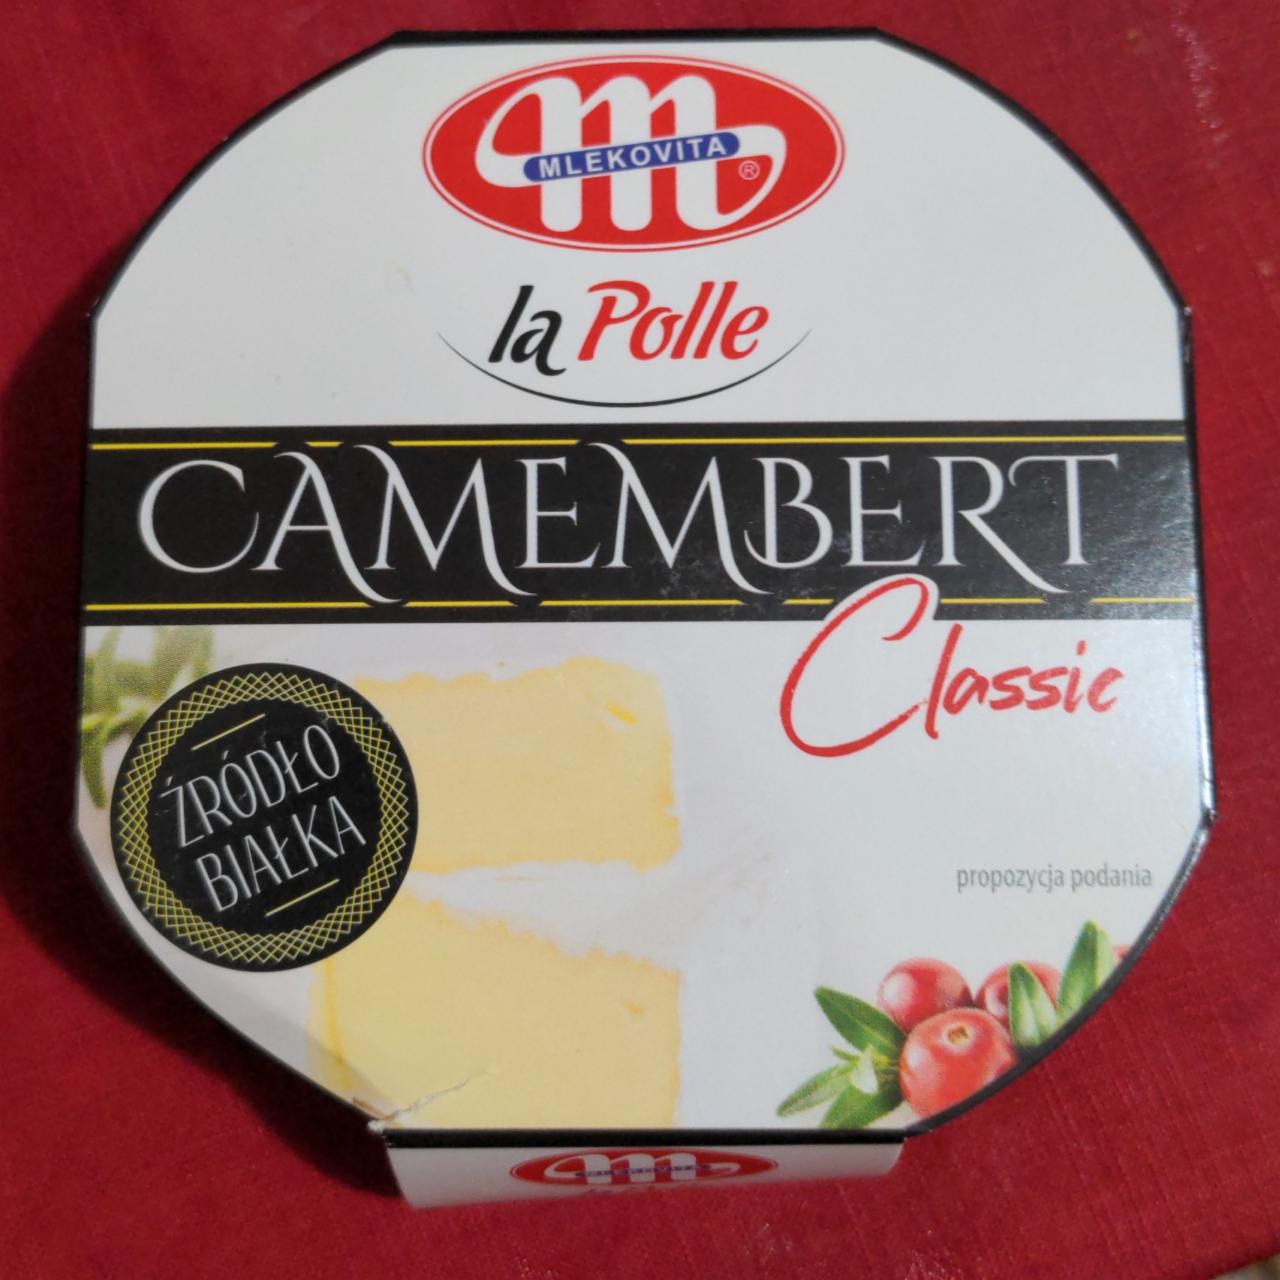 Zdjęcia - Camembert classic la Polle Mlekovita